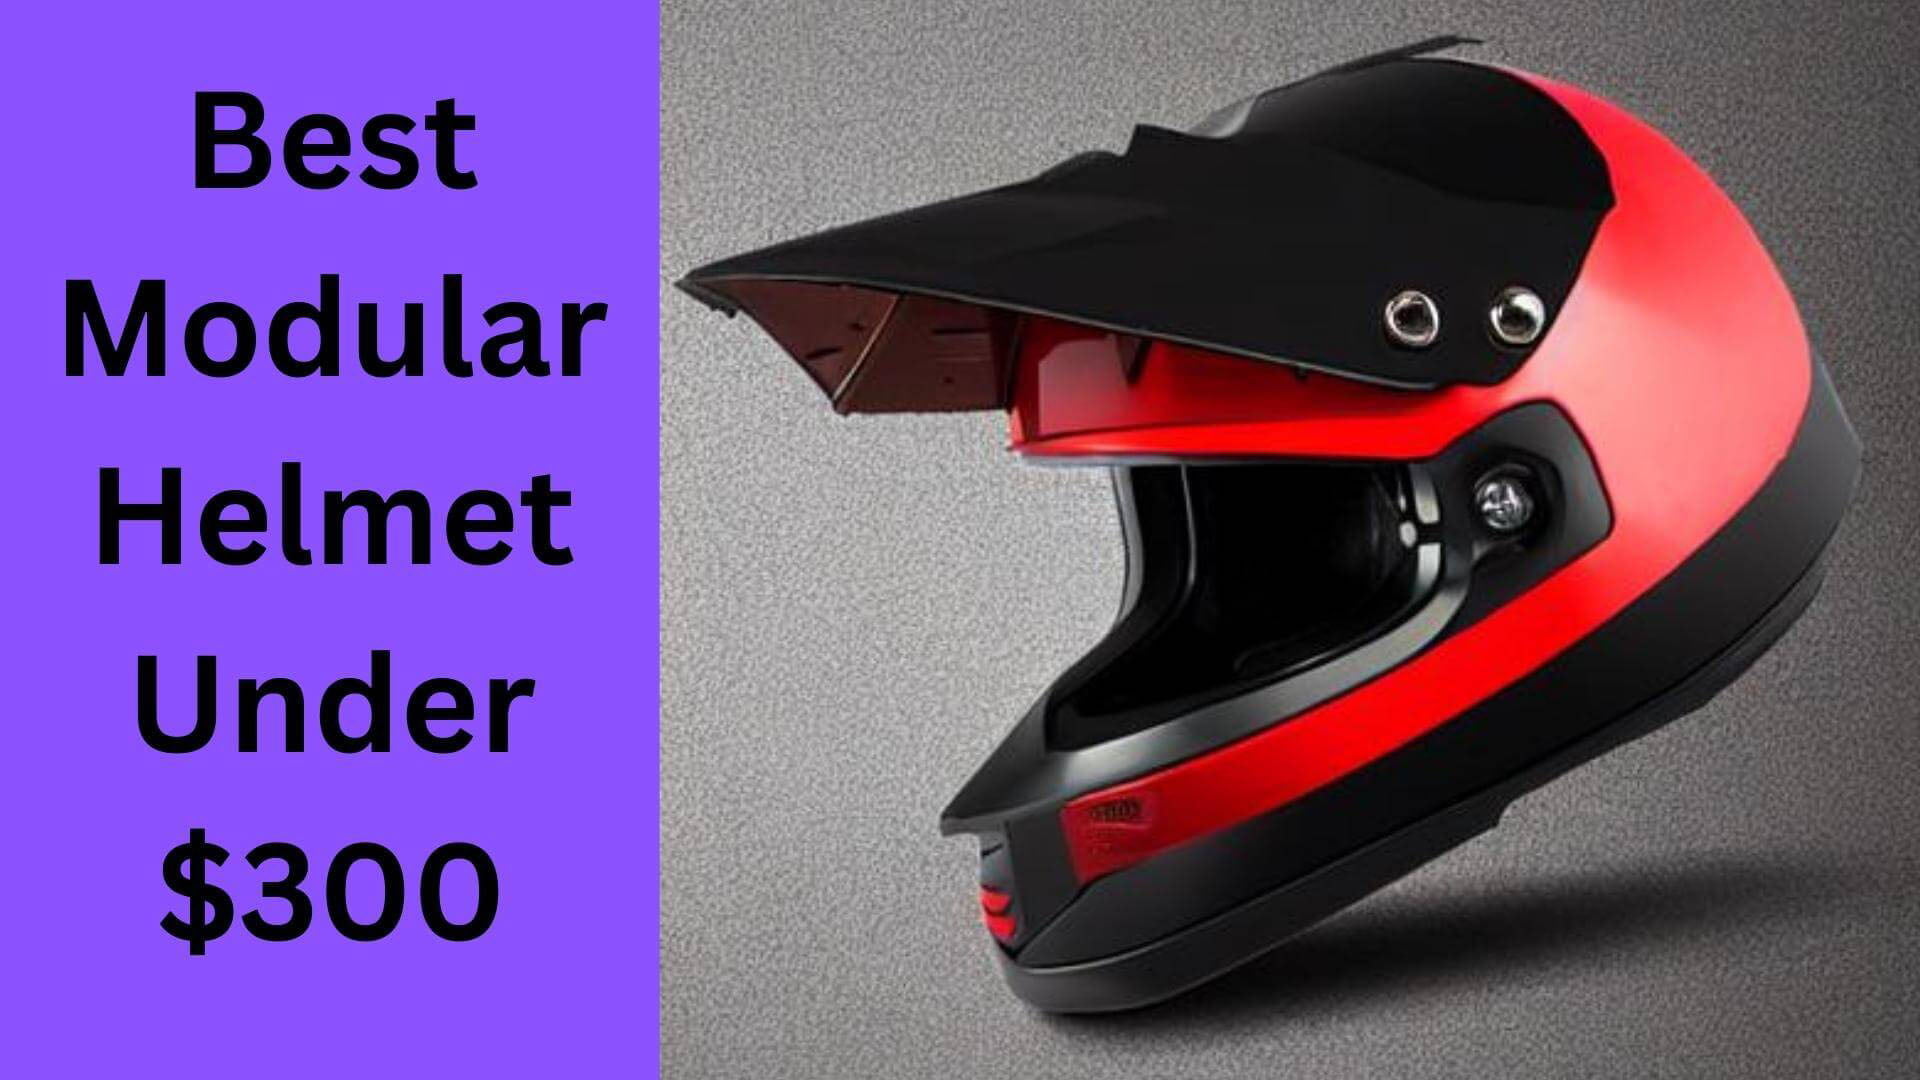 Best Modular Helmet under $300